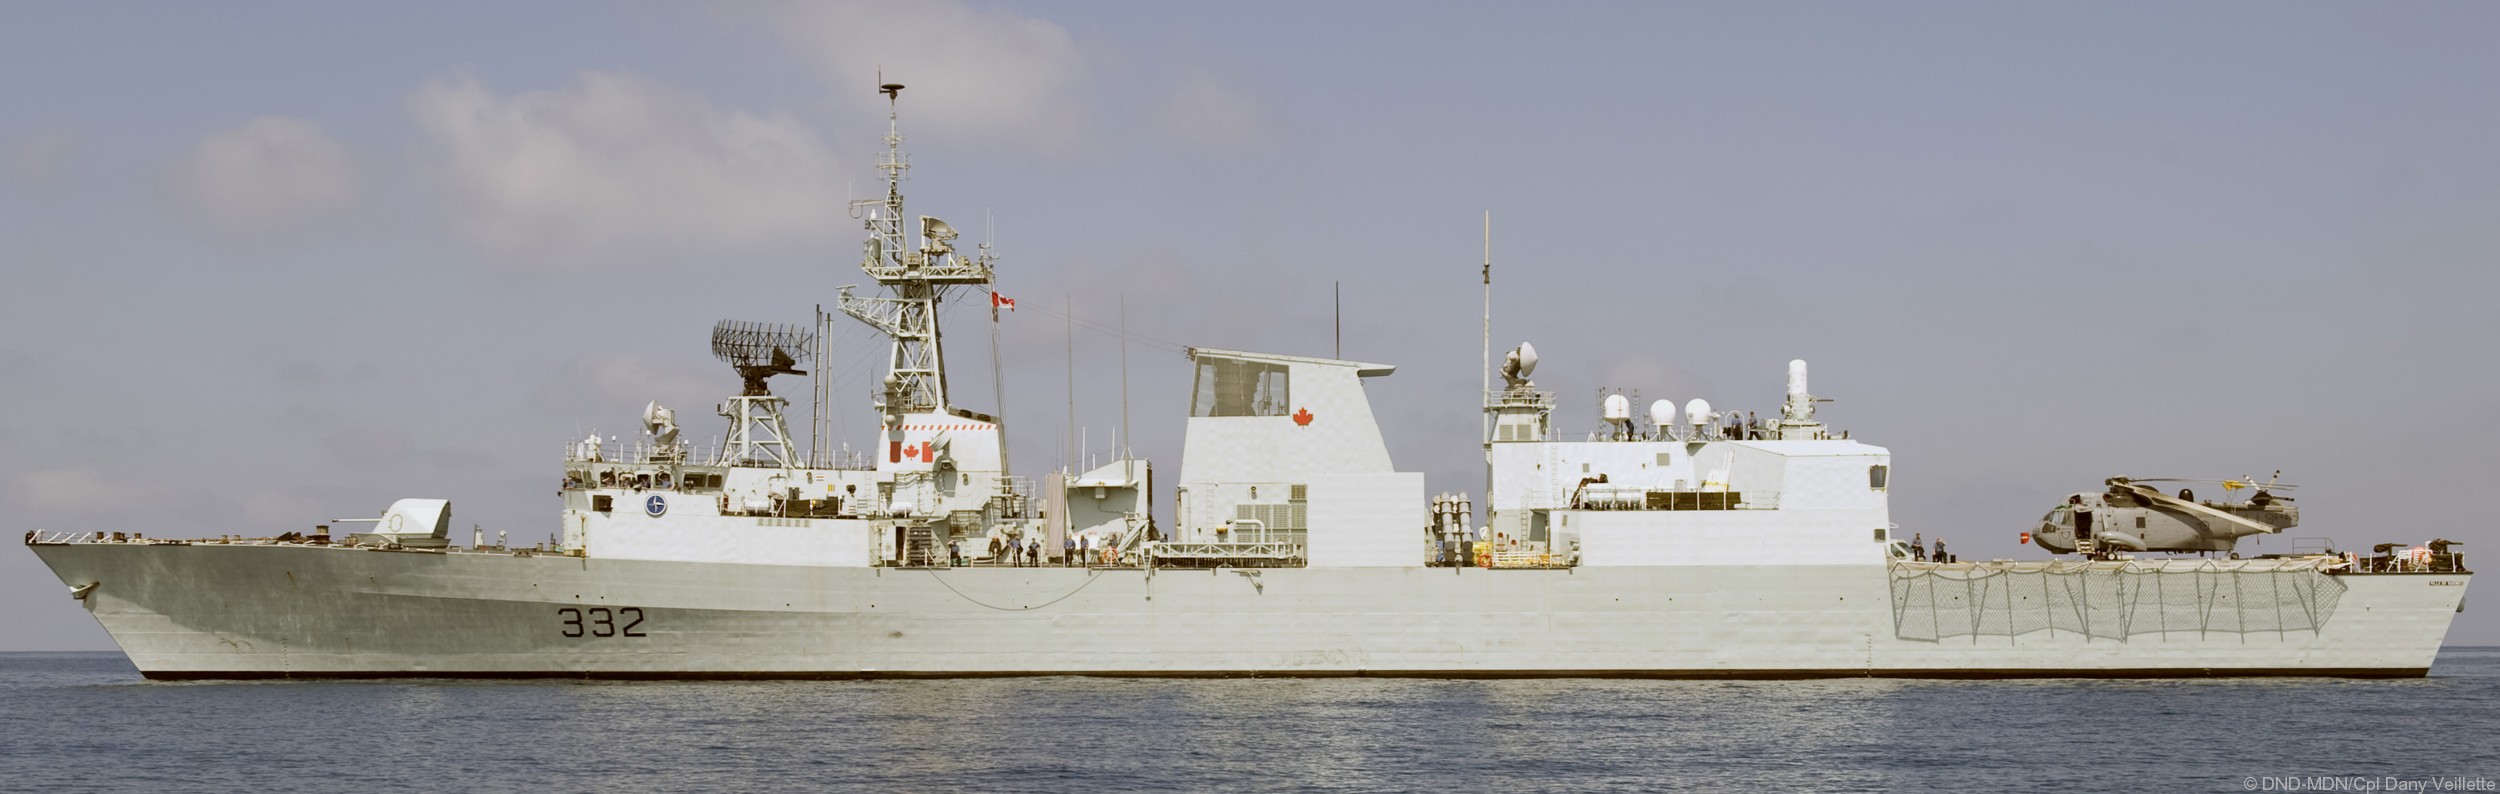 ffh-332 hmcs ville de quebec halifax class helicopter patrol frigate ncsm royal canadian navy 34